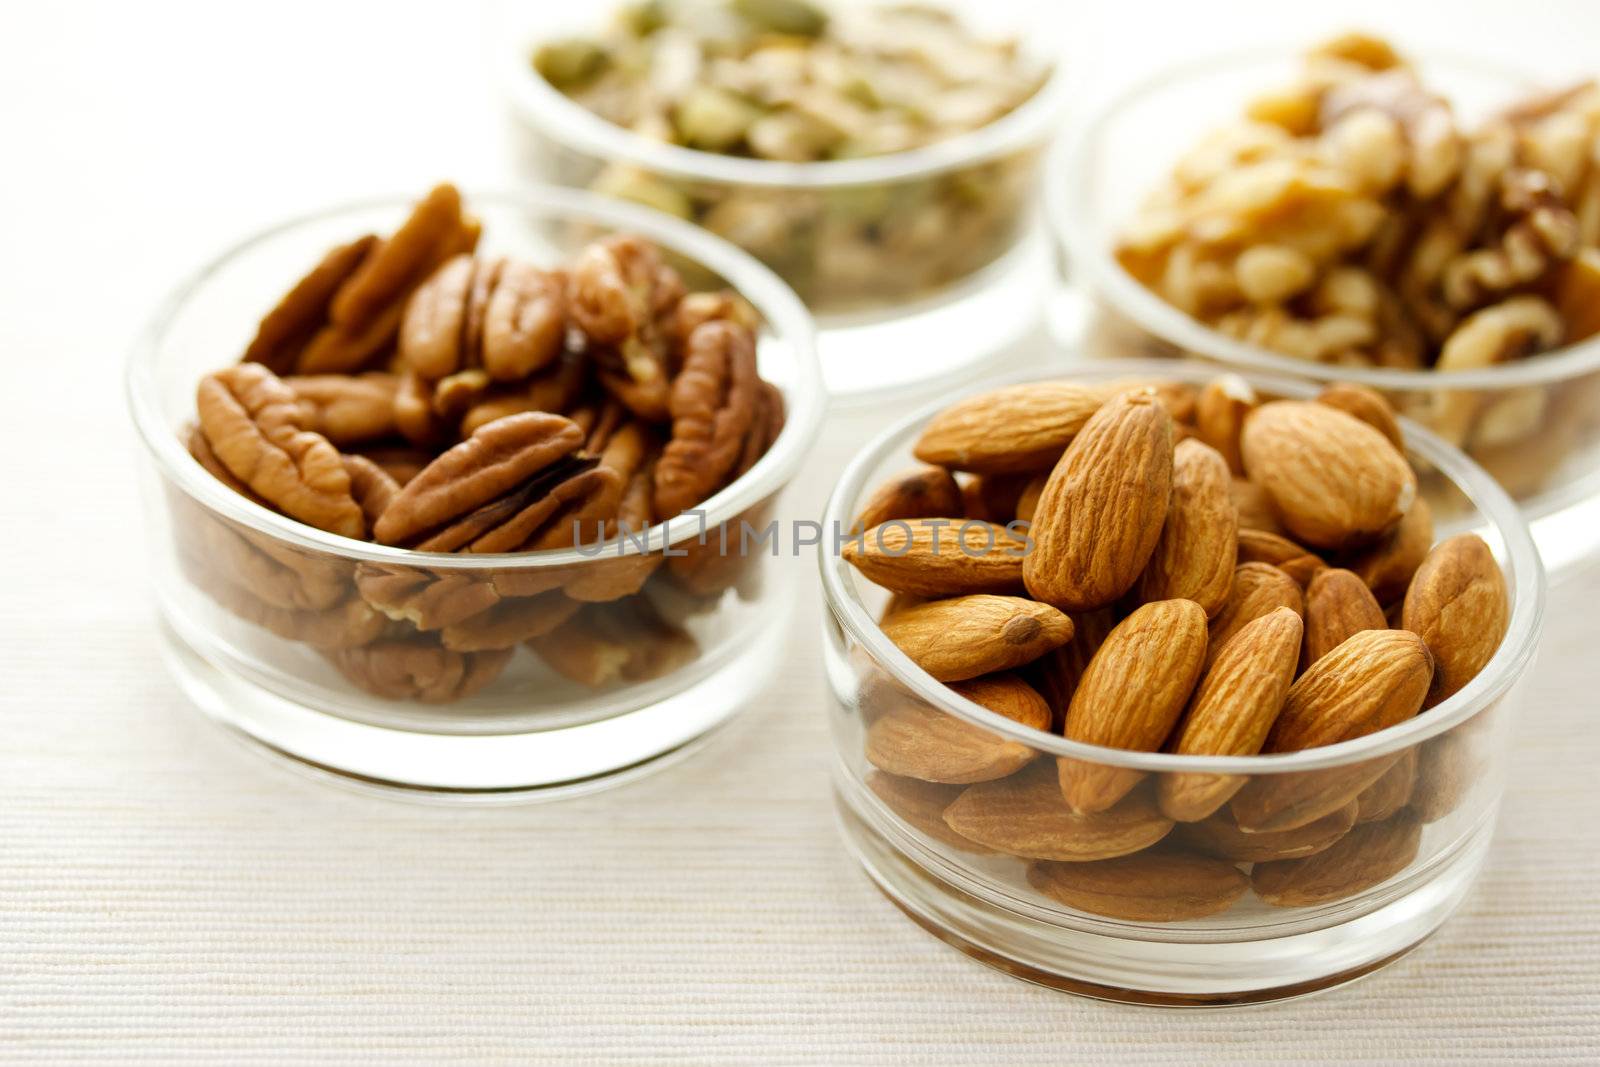 Assortment of nuts  by melpomene